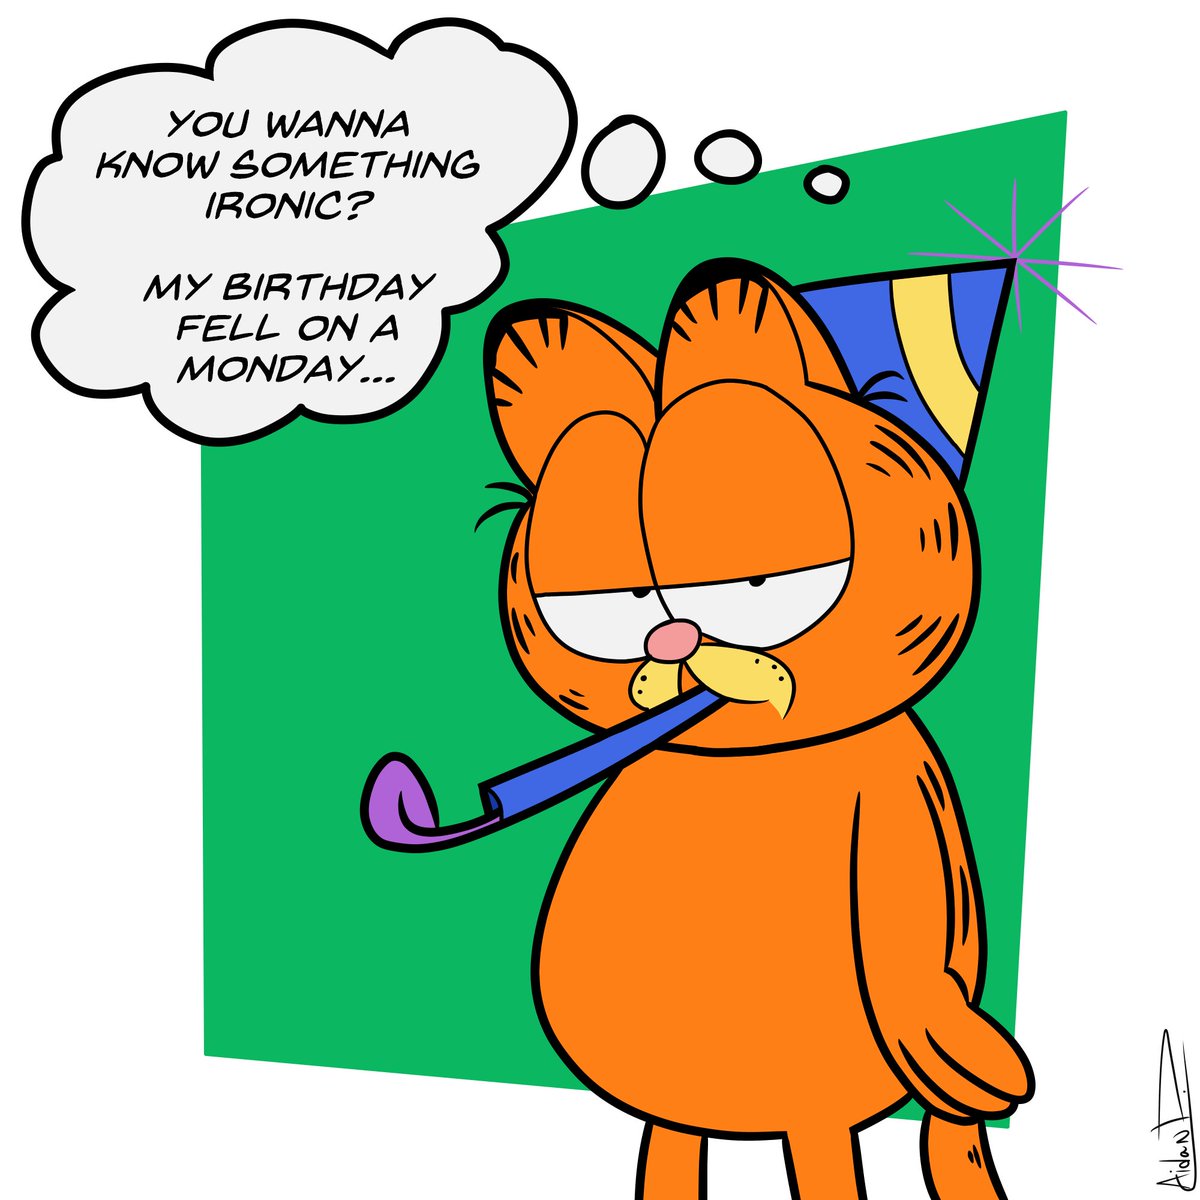 And now, some Irony with Garfield...

#Garfield #JimDavis #FanArt #ArtistOnTwitter